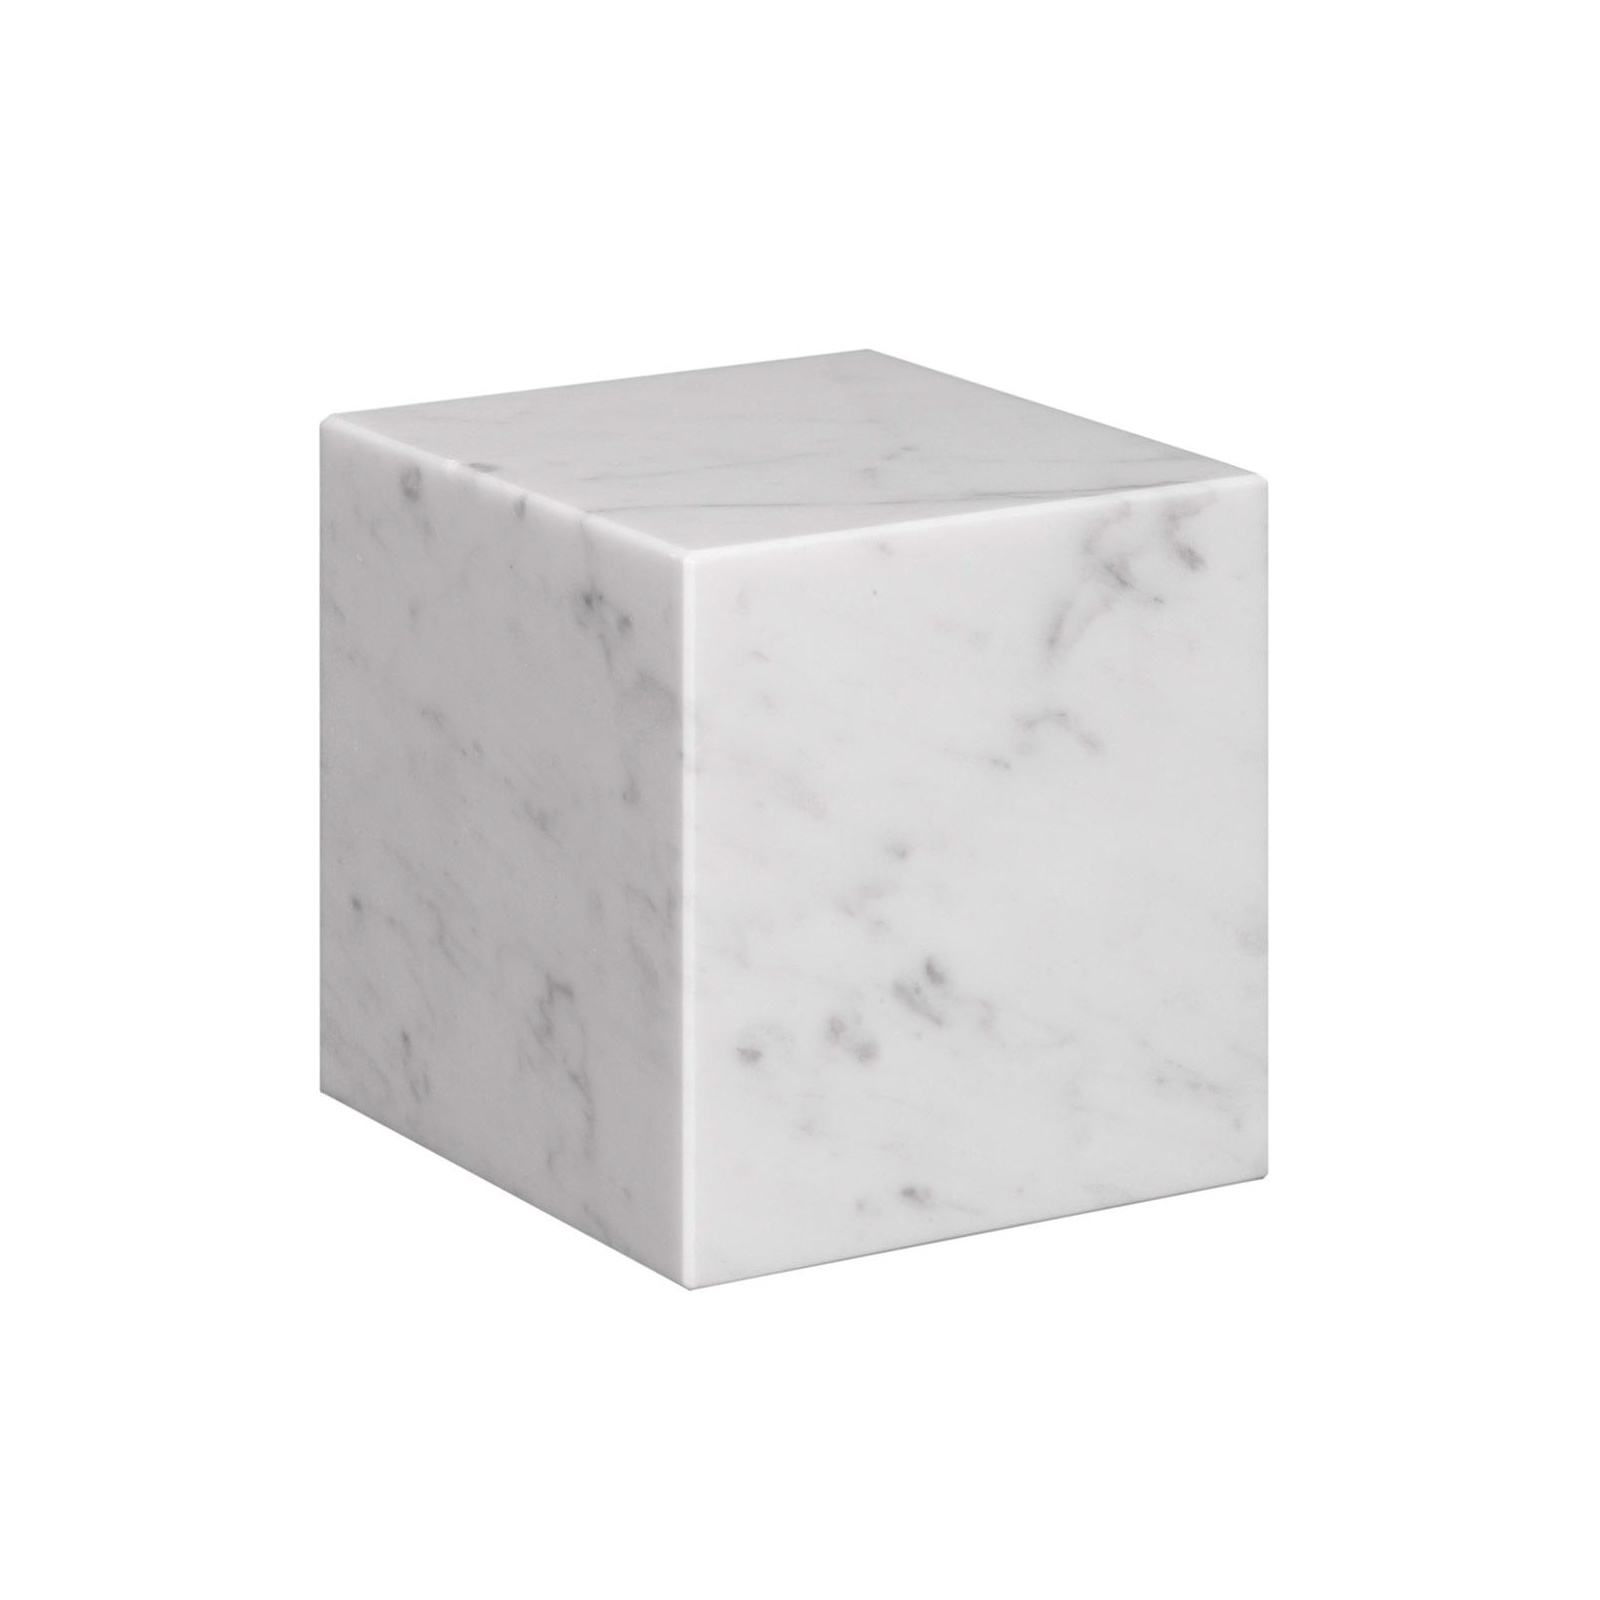 e15 - Stop Buchstütze H 10cm - weiß/Marmor Carrara/LxBxH 10x10x10cm von e15